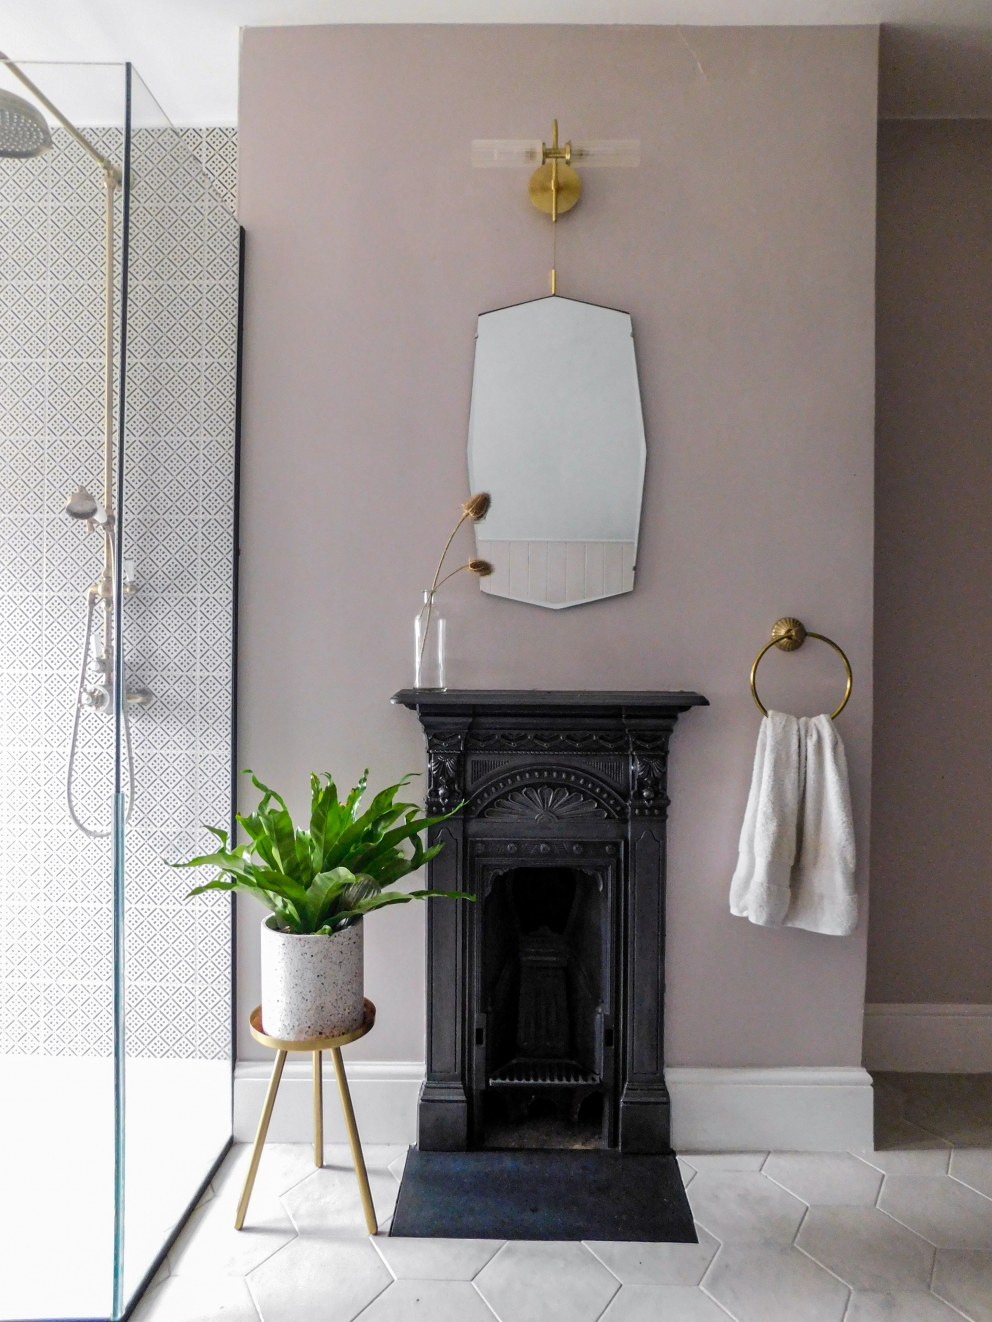 WD18 Bathroom | Original Fireplace and Adjacent Shower | Interior Designers